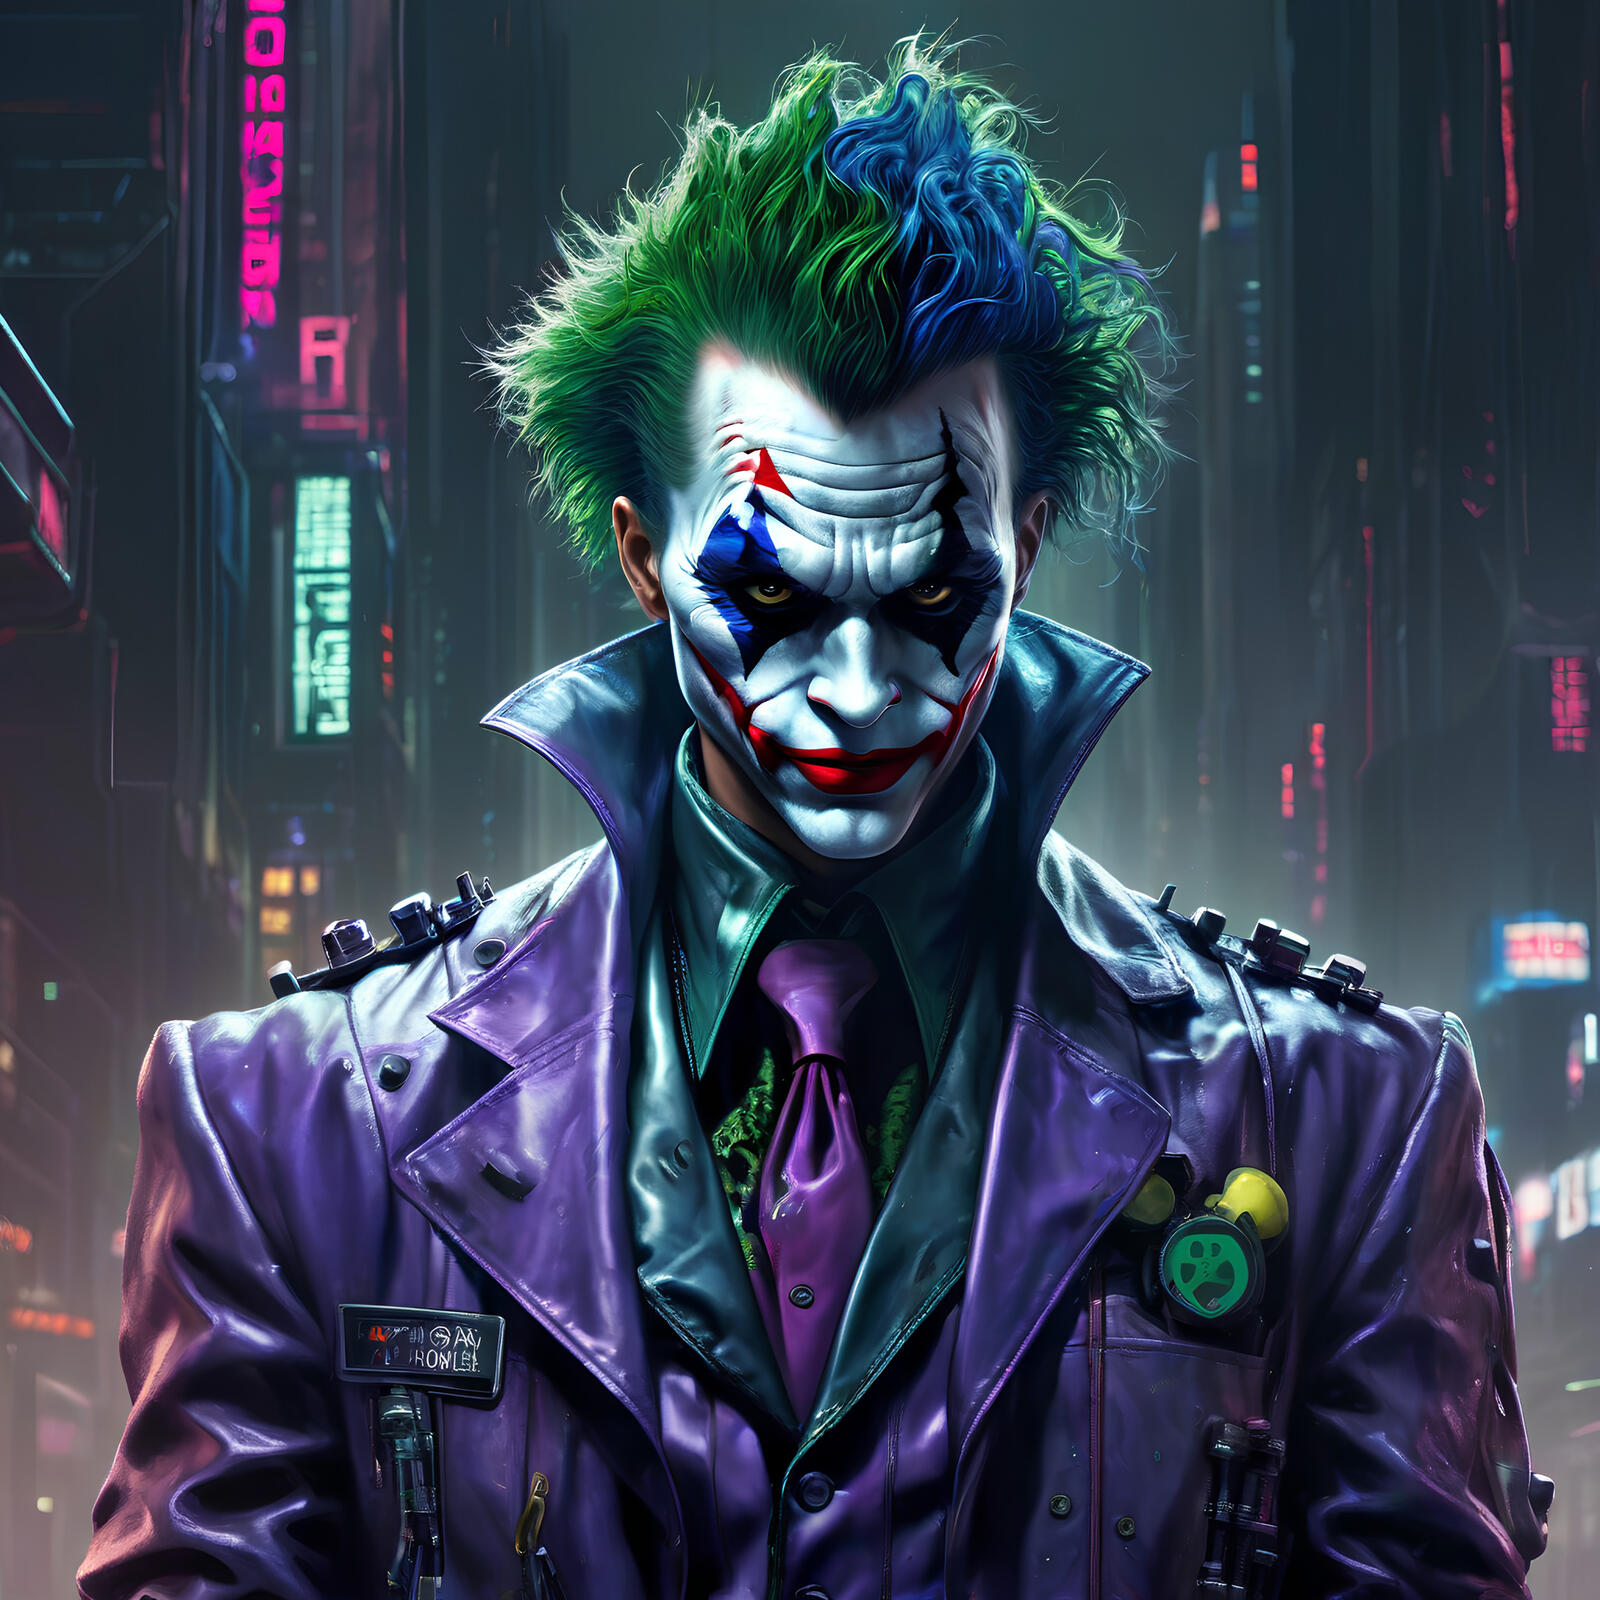 Бесплатное фото Joker cyberpunk